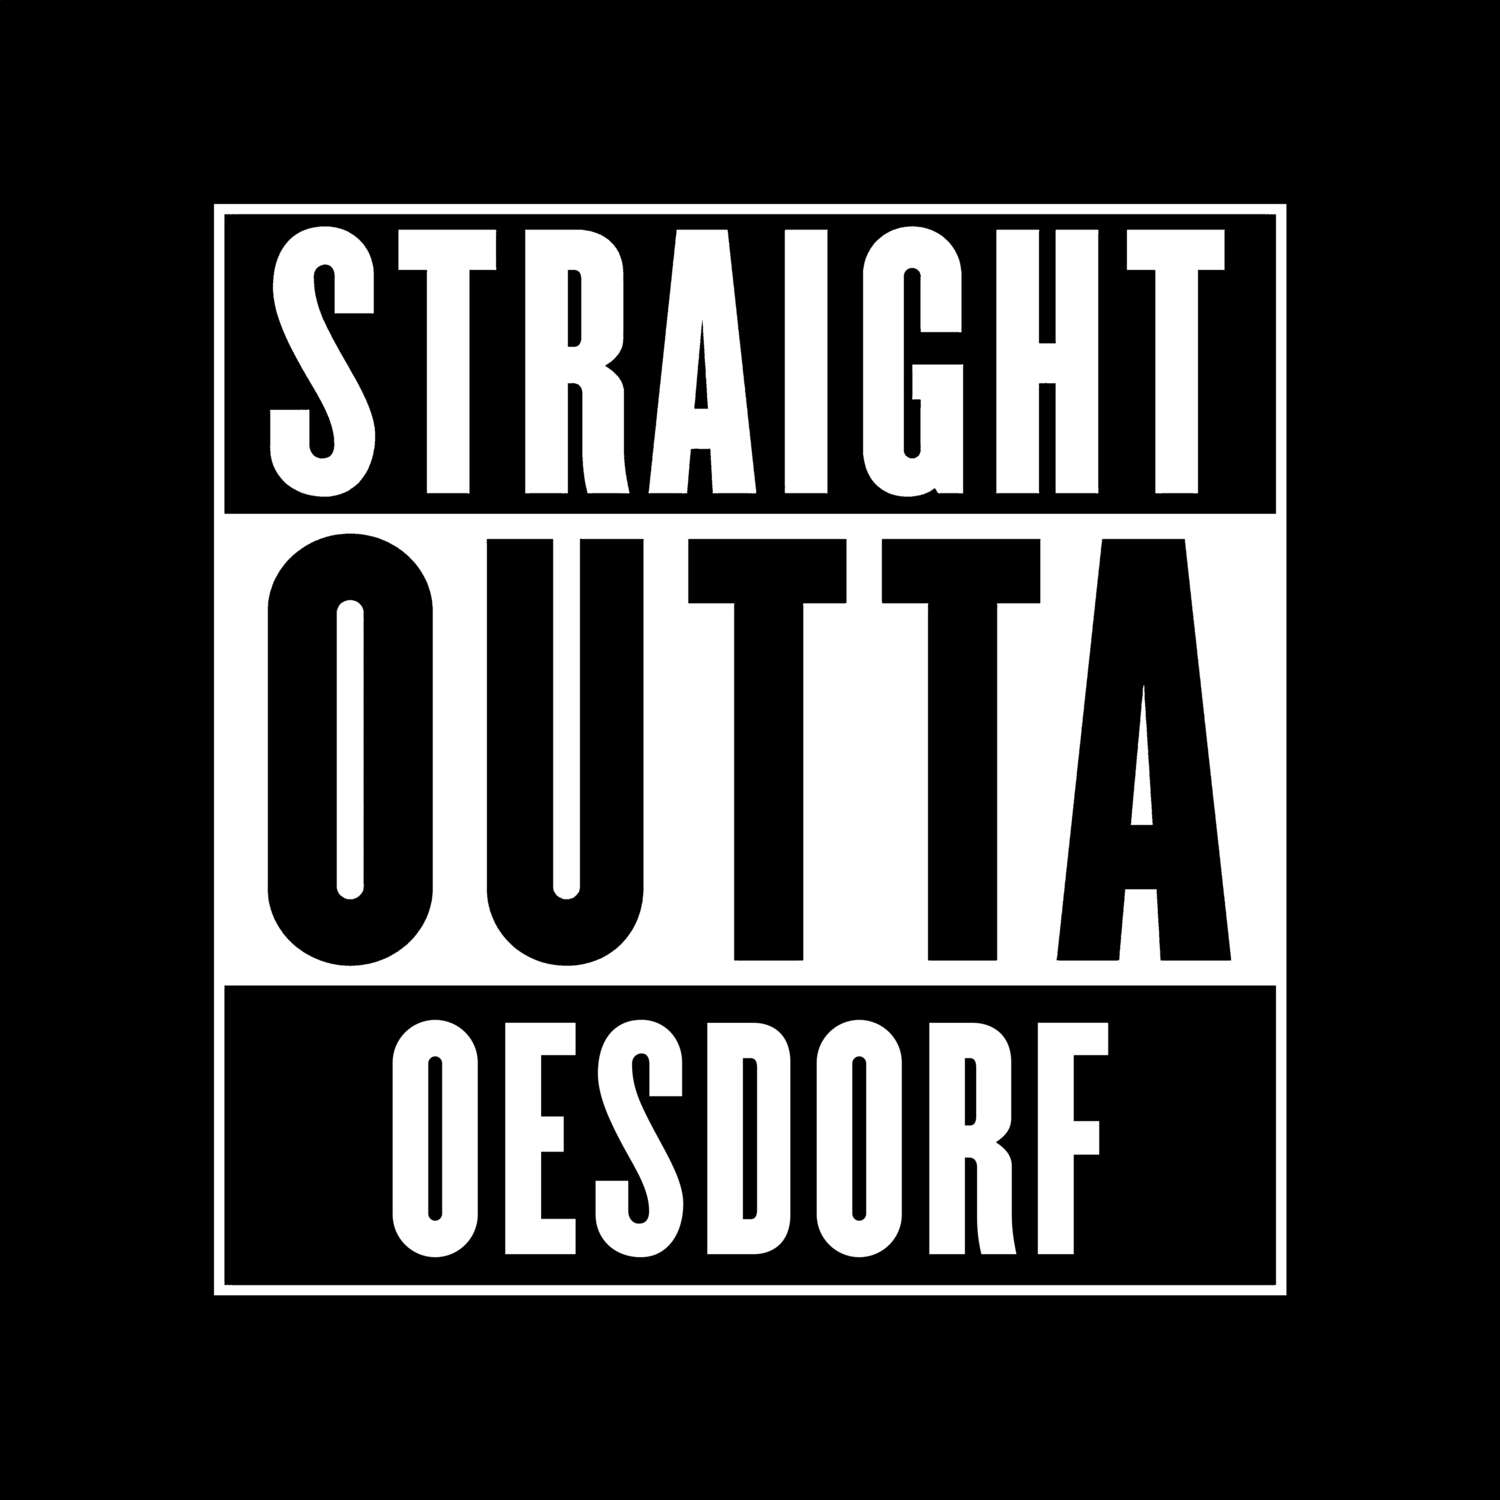 Oesdorf T-Shirt »Straight Outta«